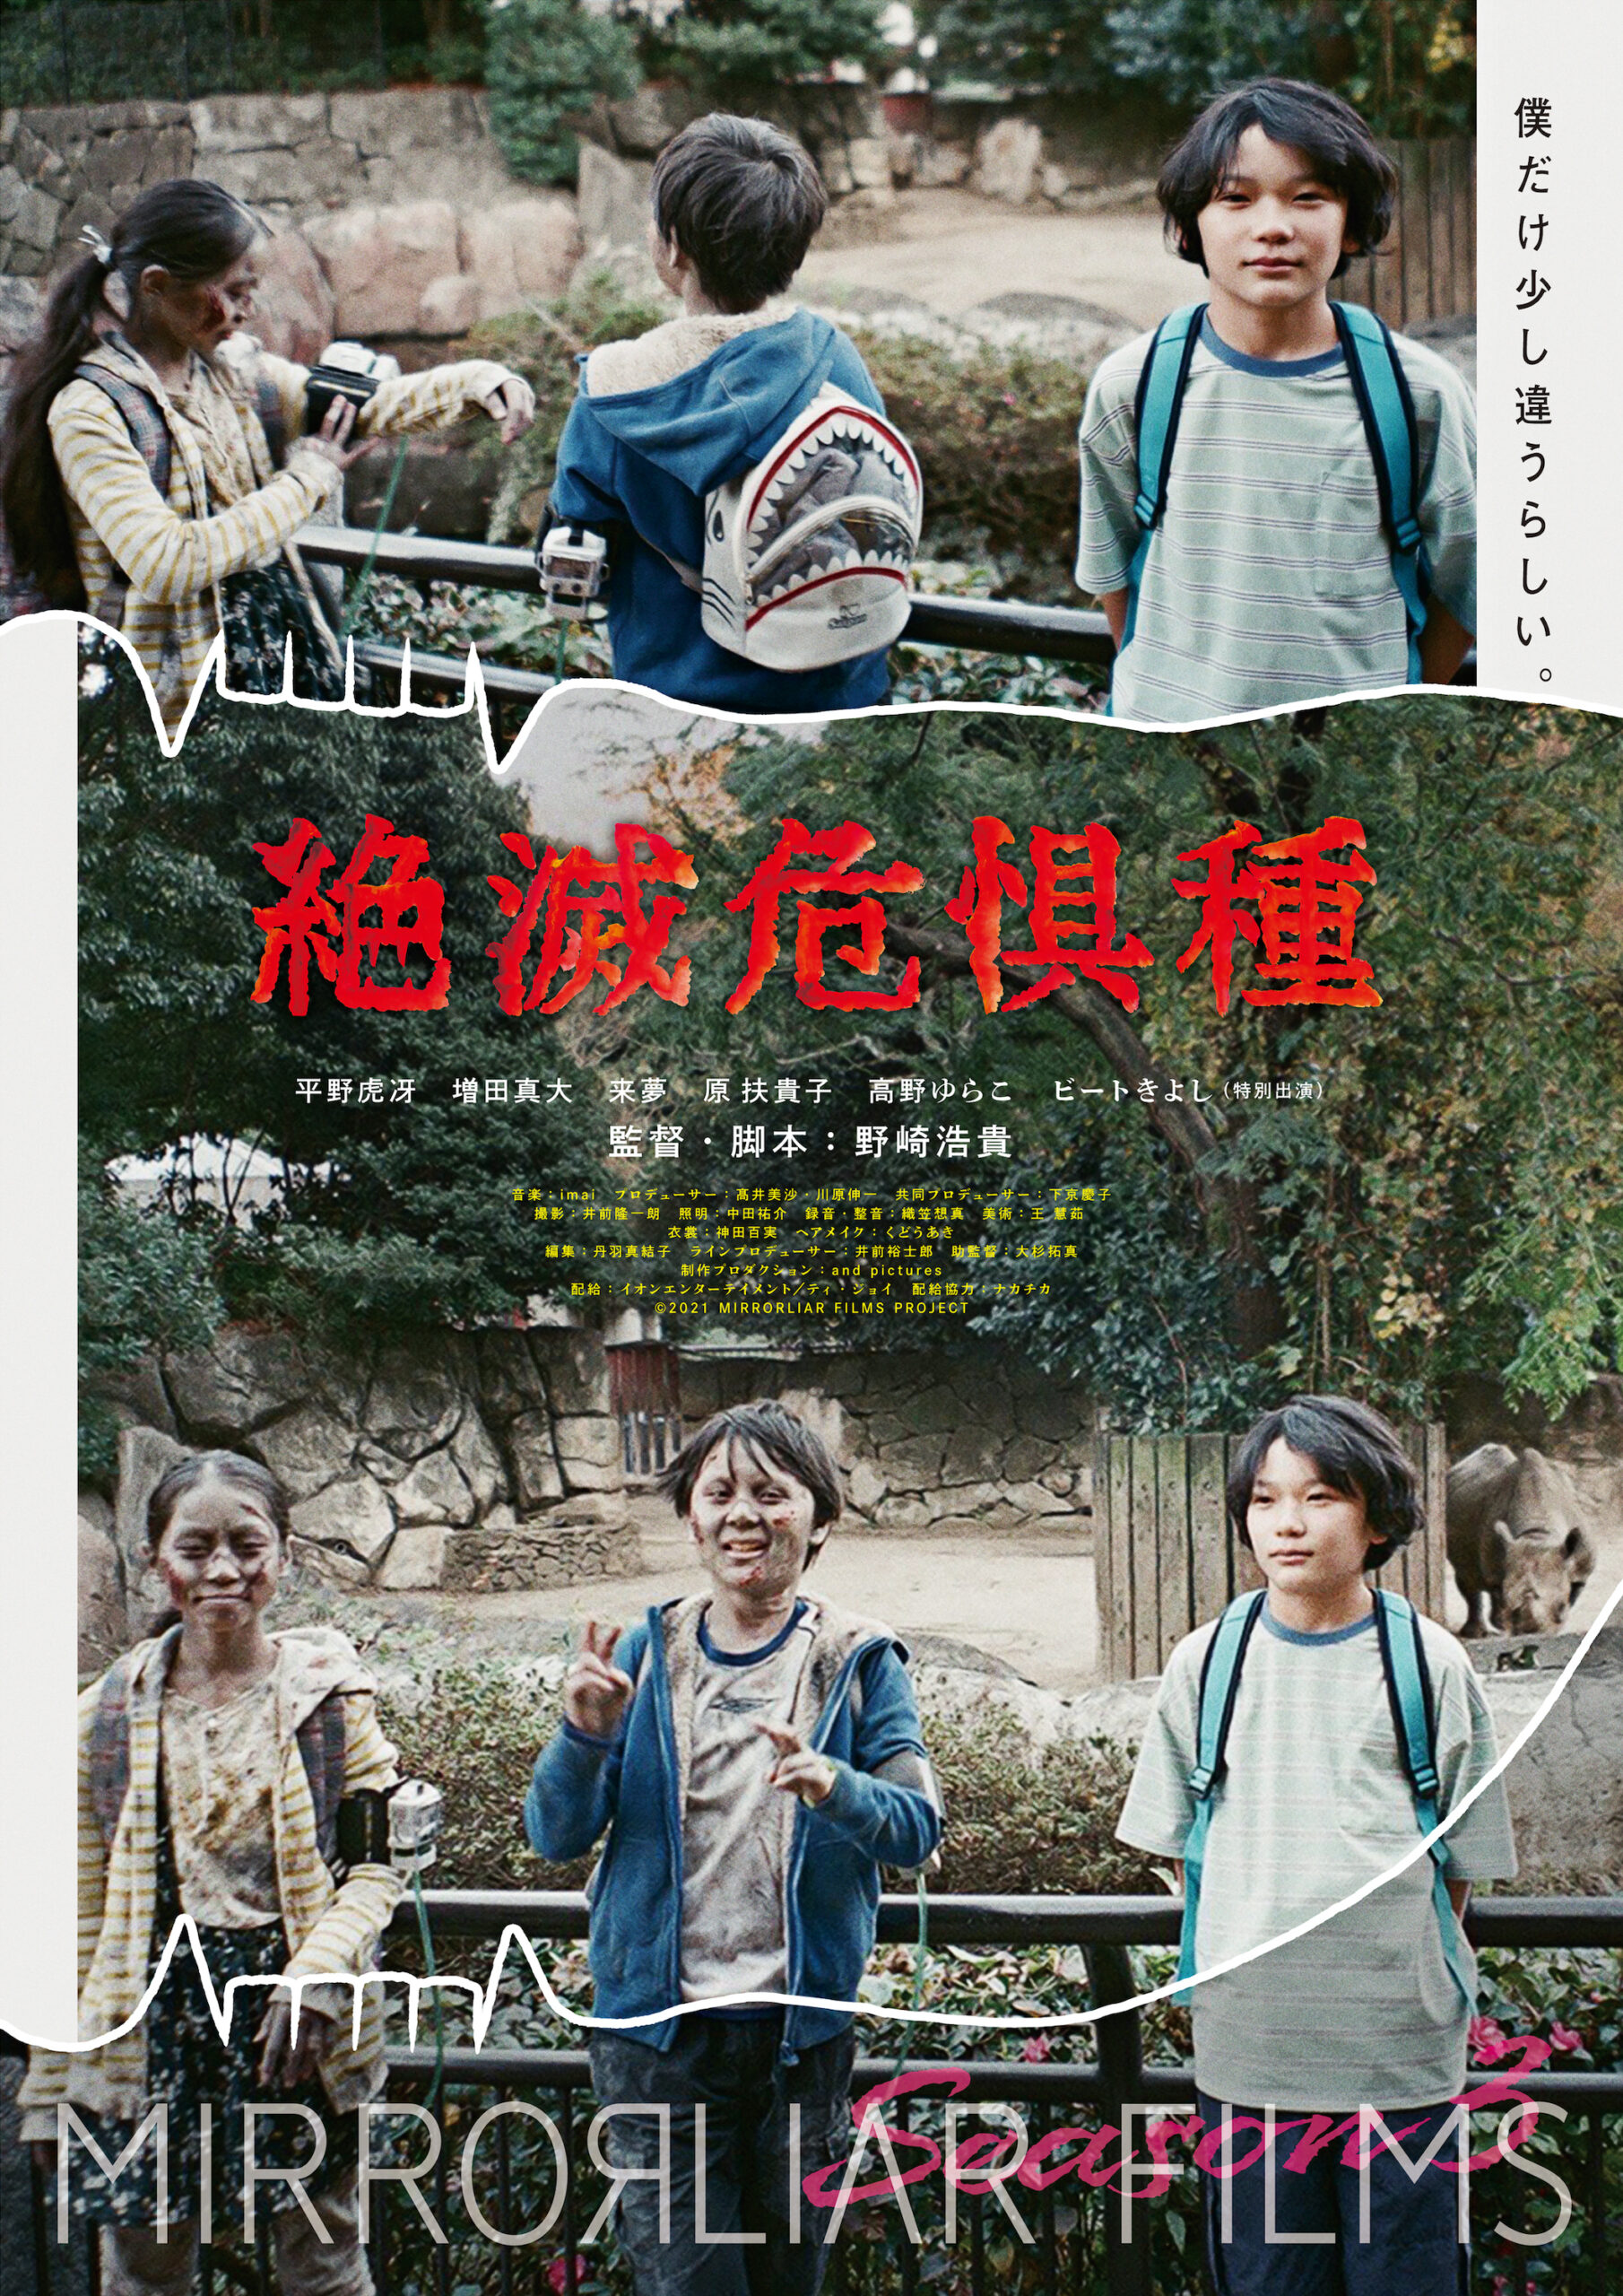 MIRRORLIAR FILMS Season3
AEON ENTERTAINMENT CO.,LTD／T-JOY NAKACHIKA
©️2021 MIRRORLIAR FILMS PROJECT